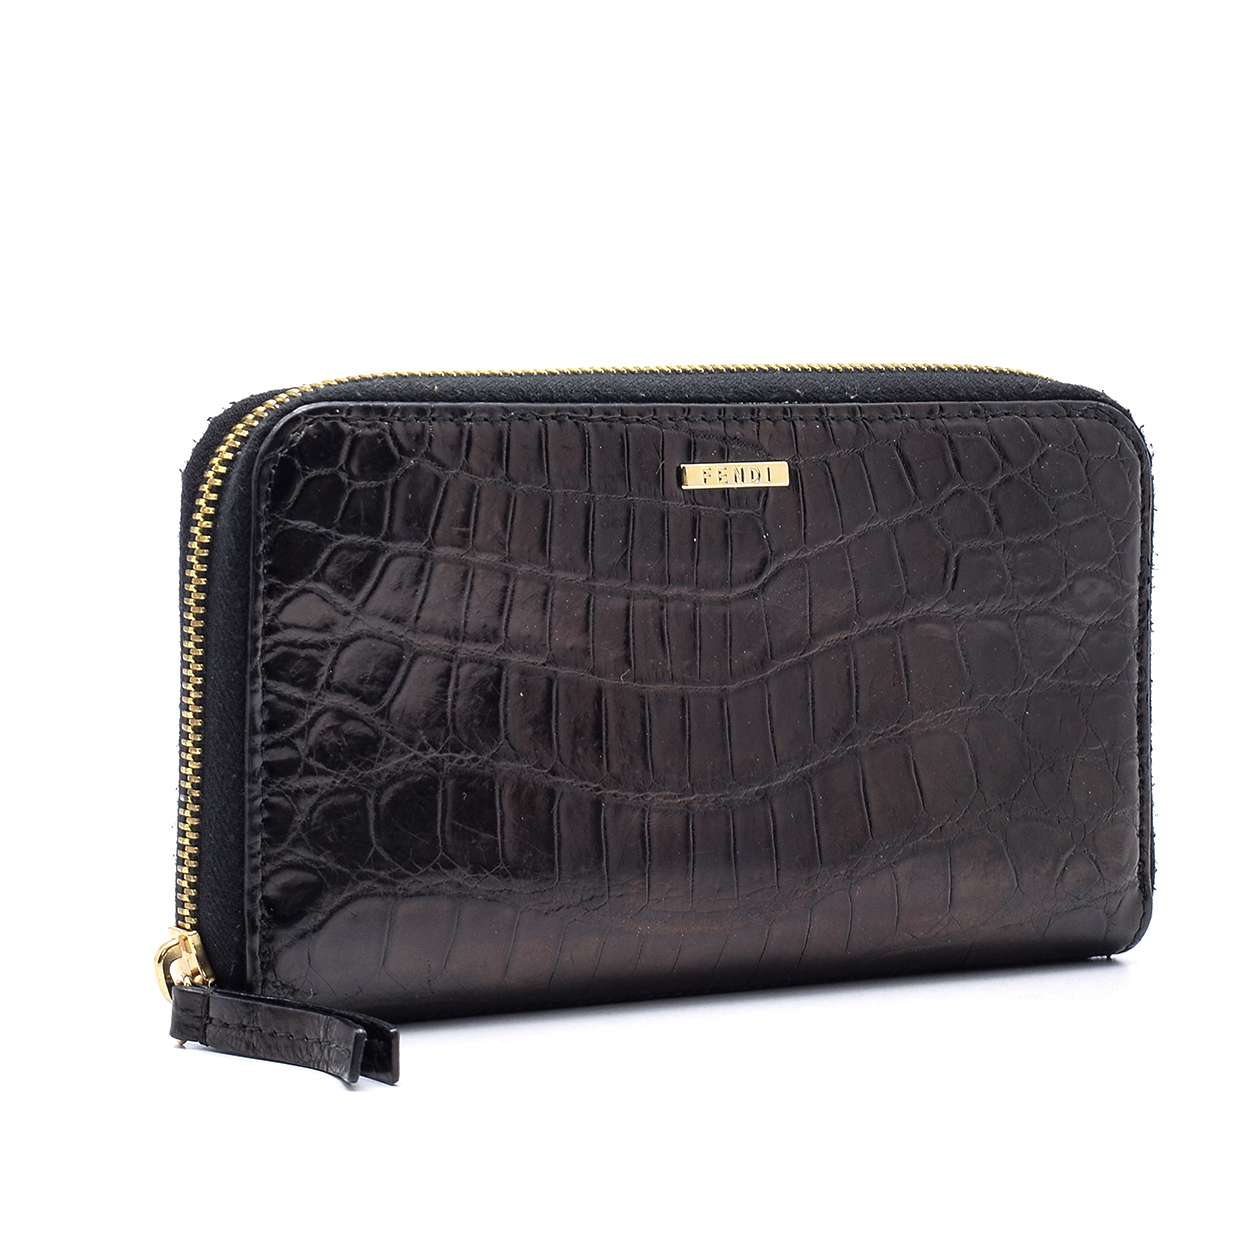 Fendi - Black Crocodile Leather Wallet